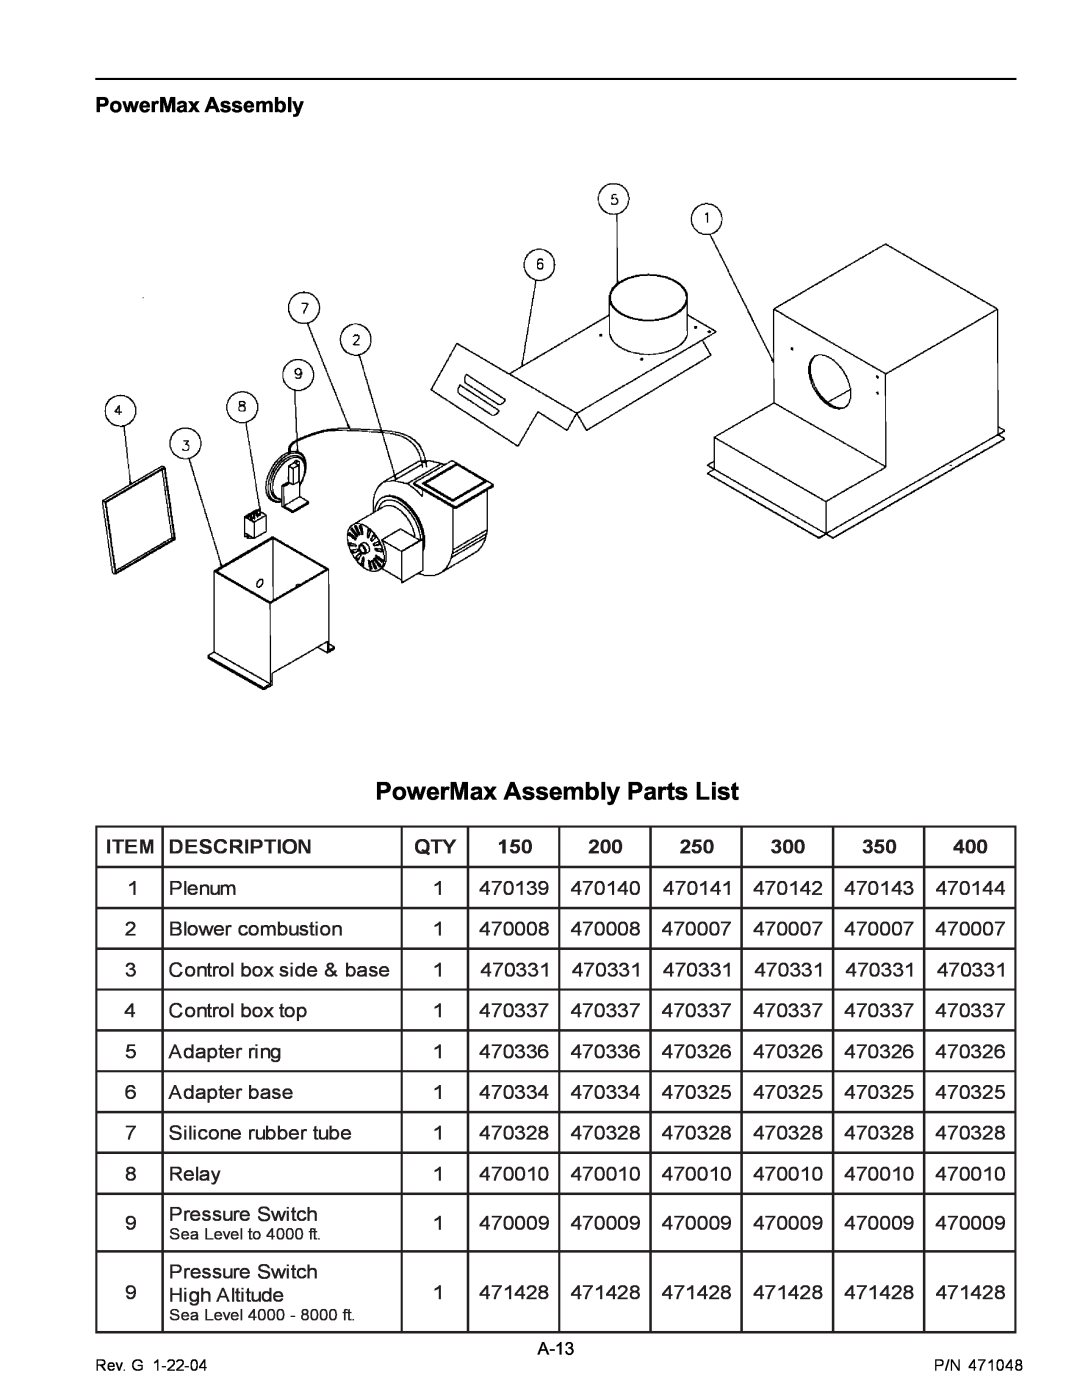 Pentair 100 installation manual PowerMax Assembly Parts List, Description 